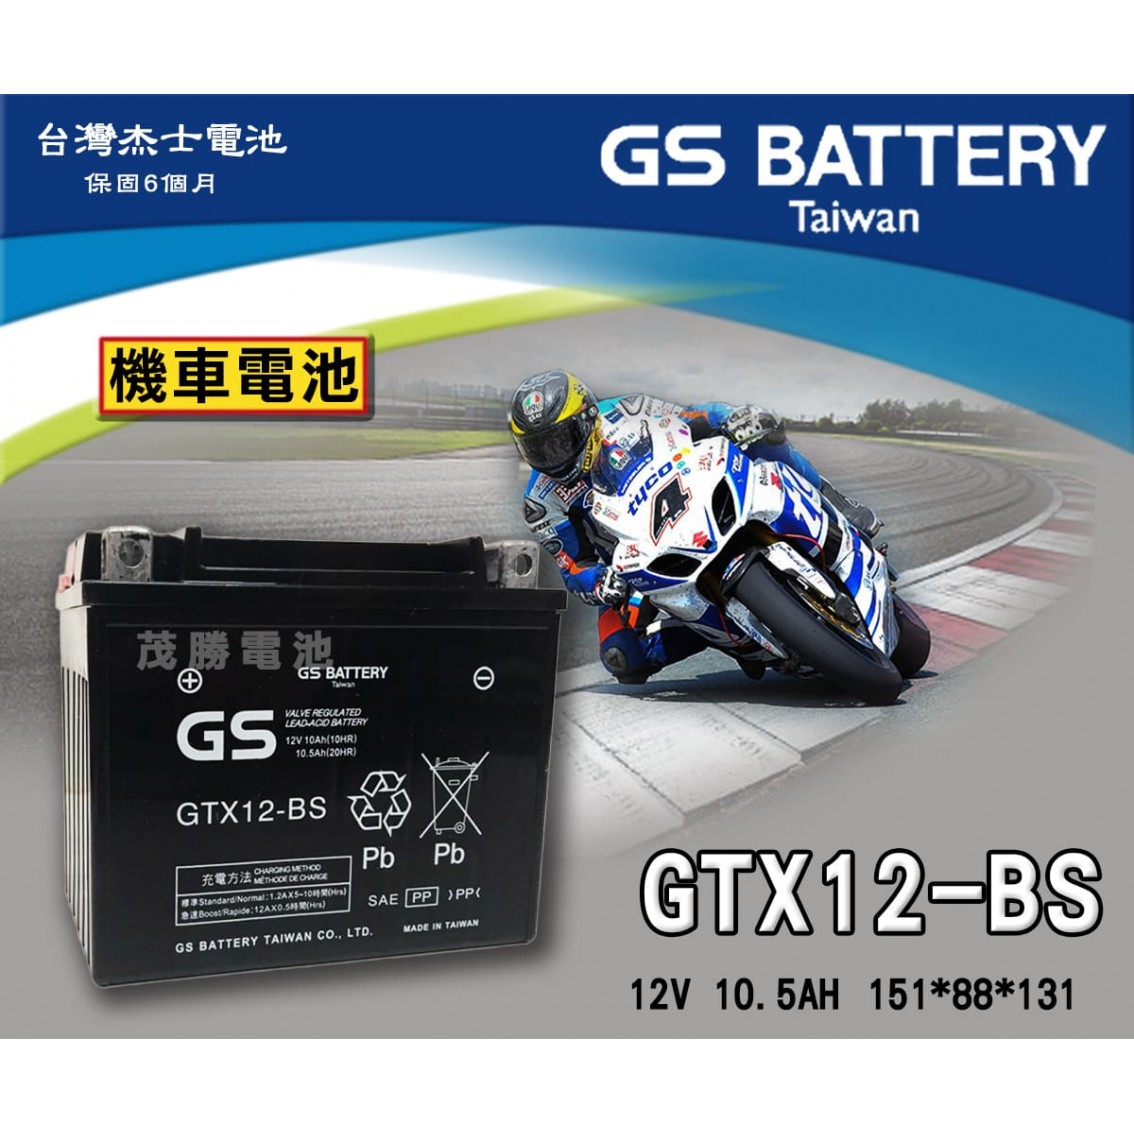 GTX12-BS